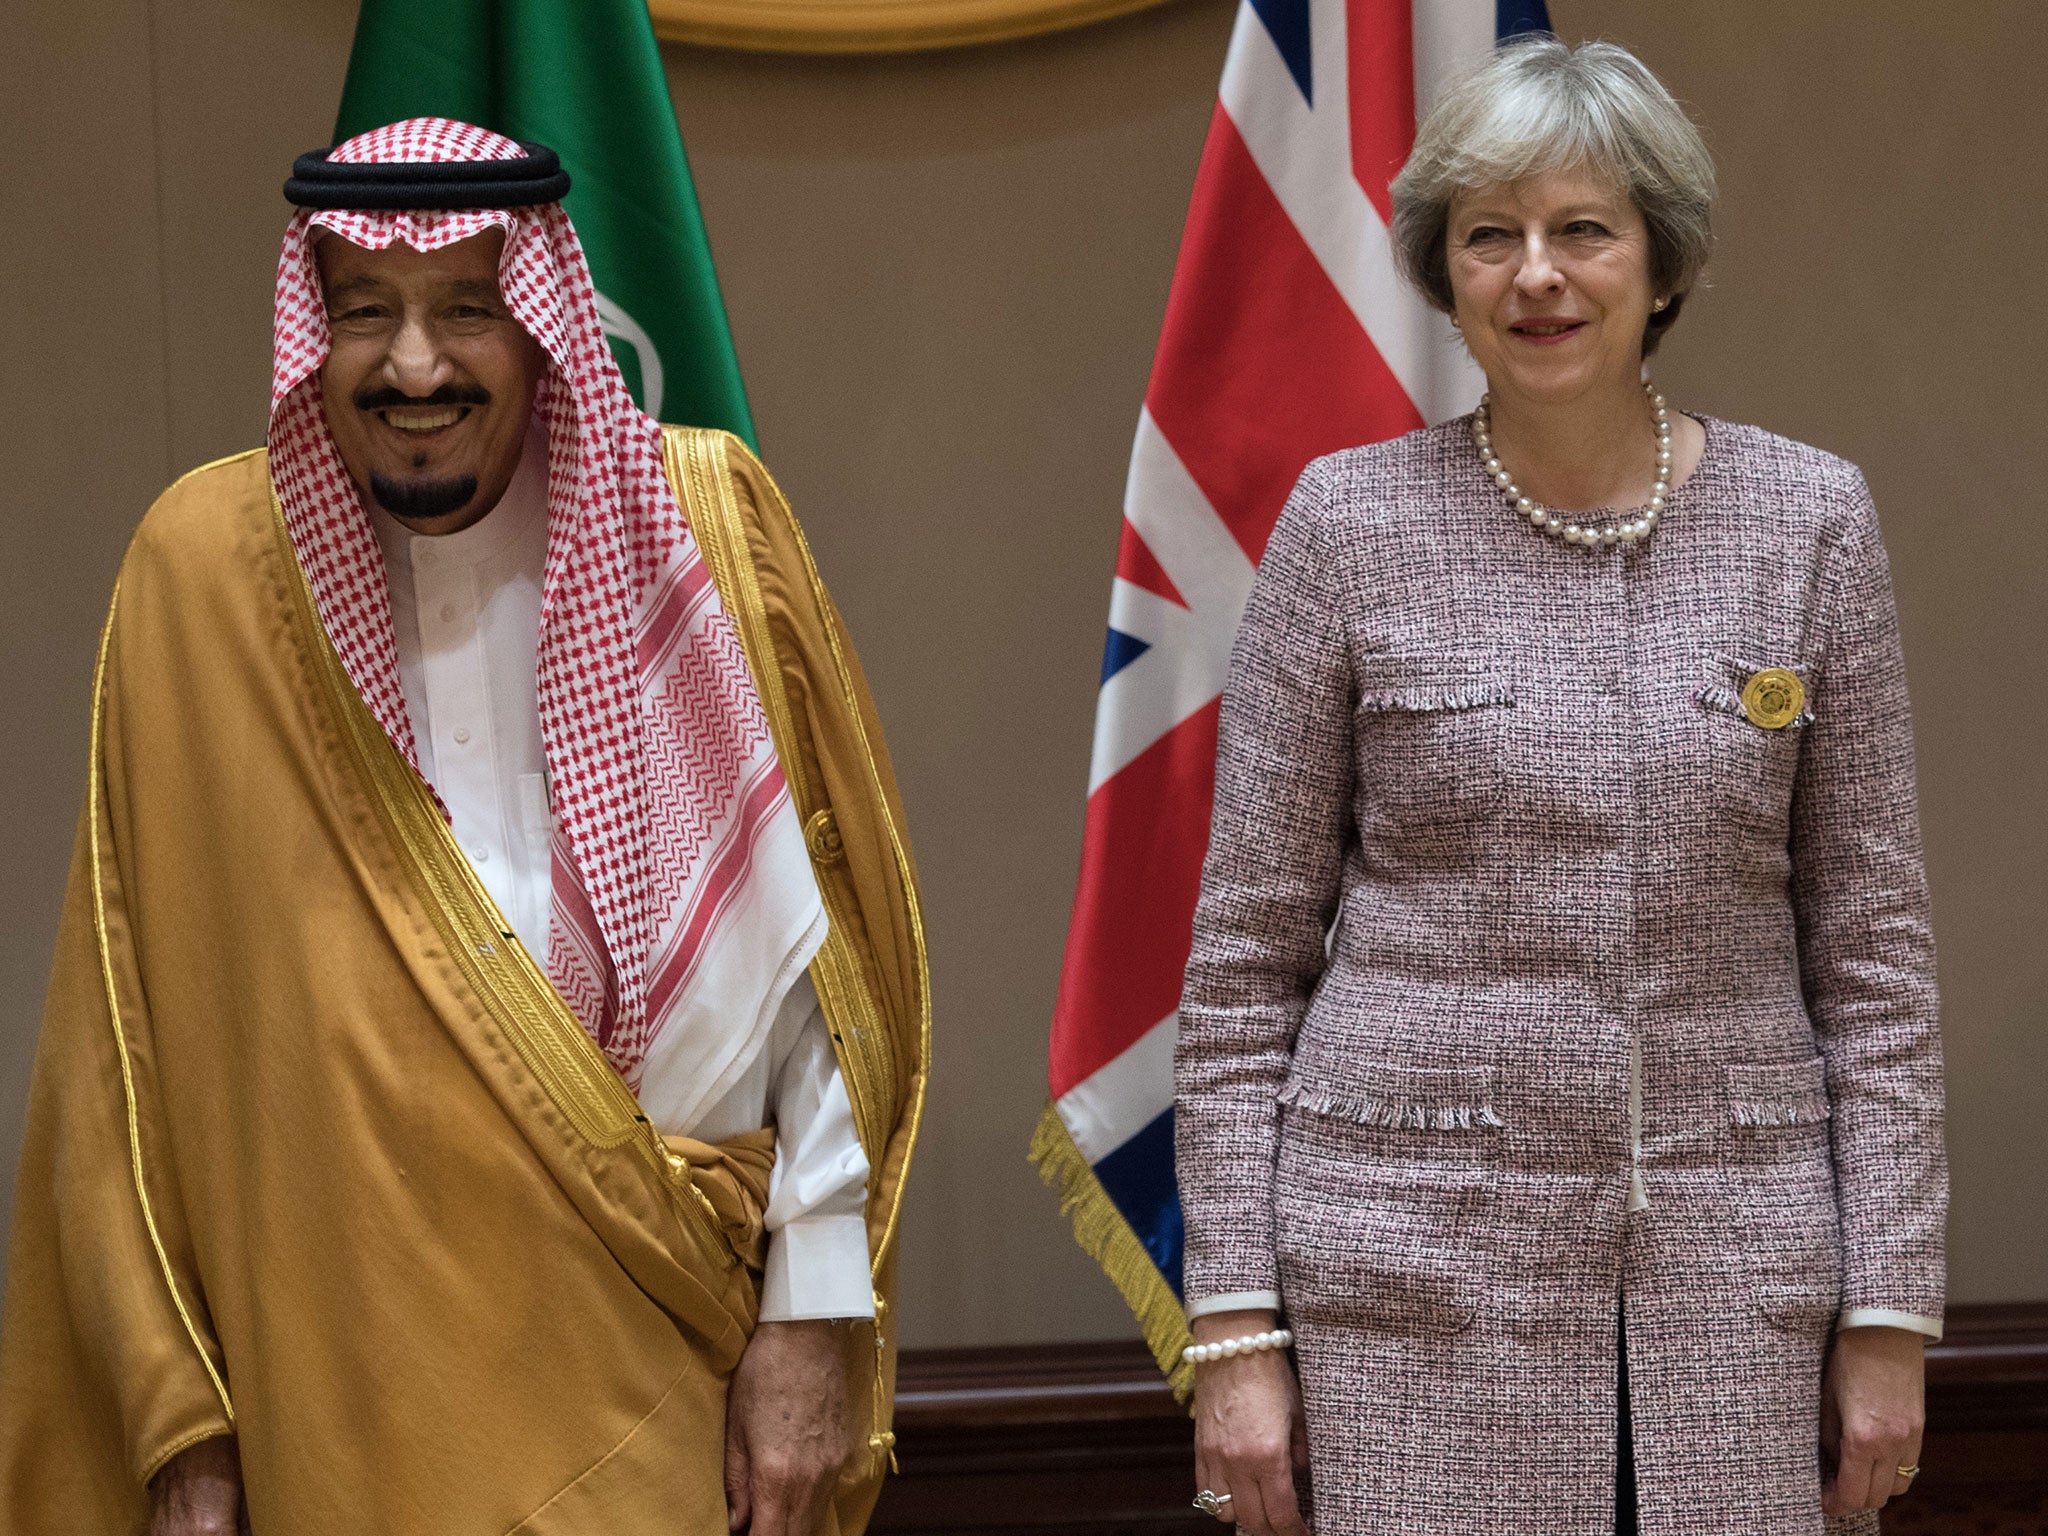 King Salman bin Abdulaziz of Saudi Arabia with Theresa May at the Gulf Cooperation Council summit in Bahrain in December